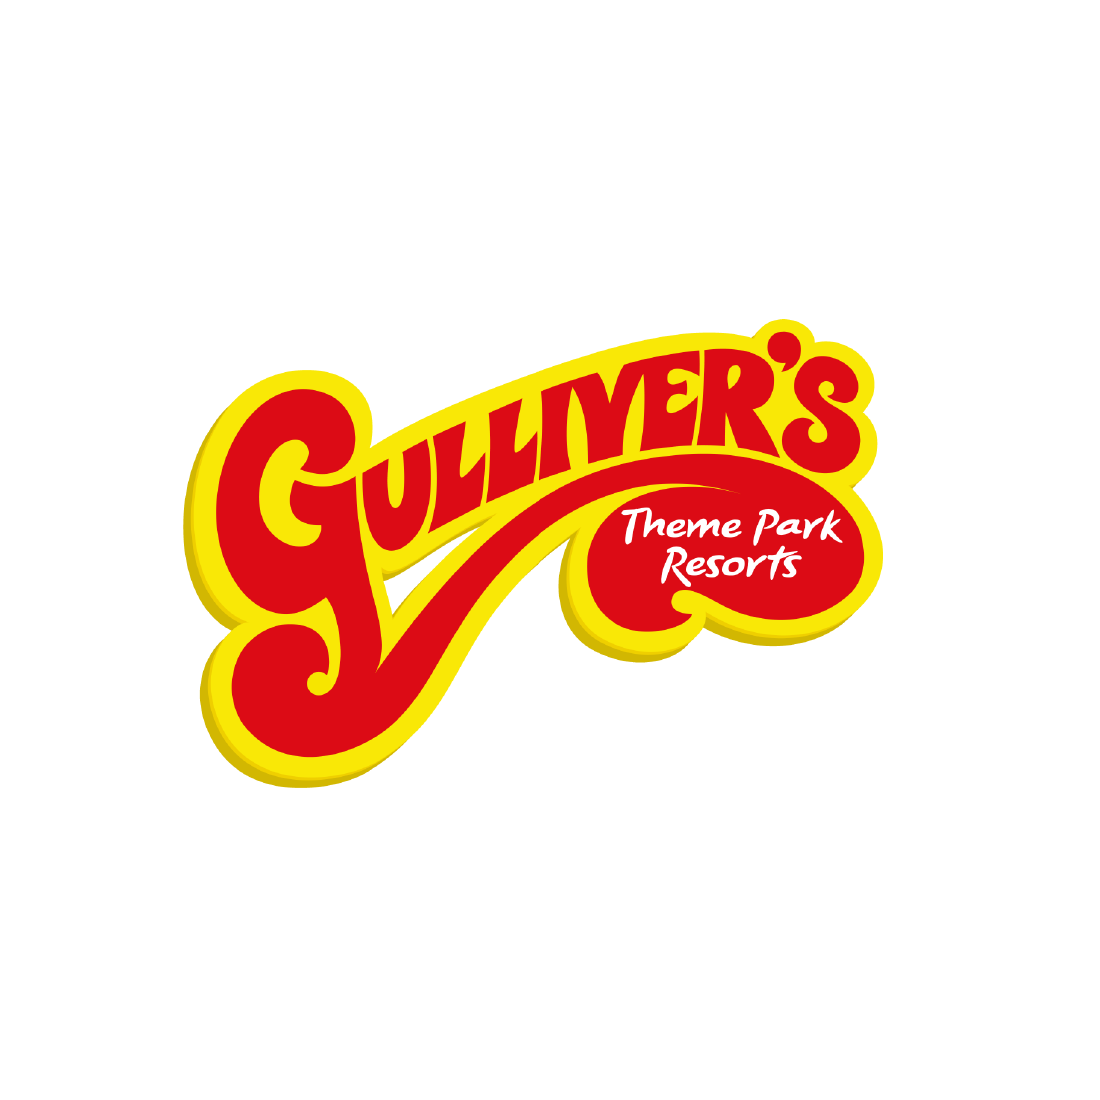 Gulliver's Theme Park Resorts logo